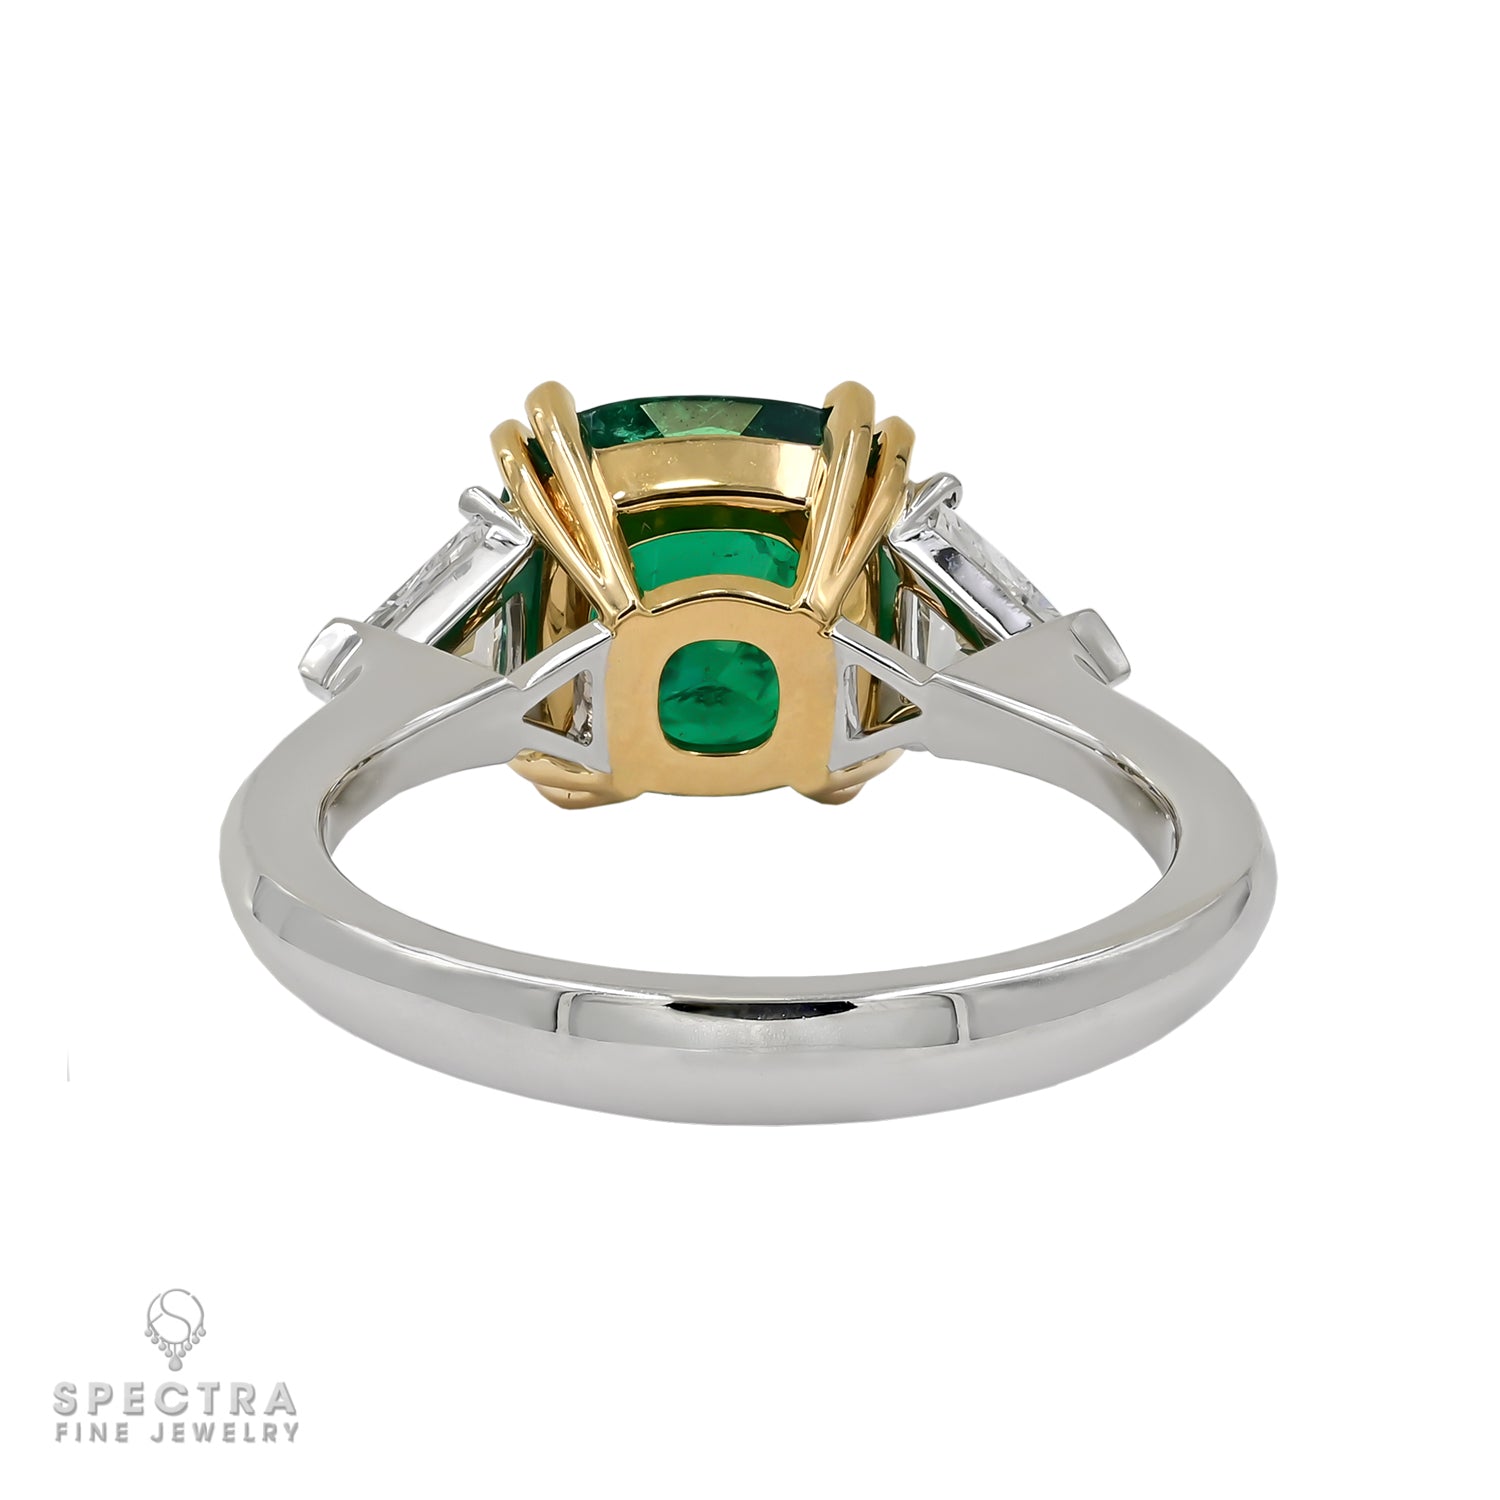 Spectra Fine Jewelry 2.34 ct. Cushion-cut Emerald Diamond Ring